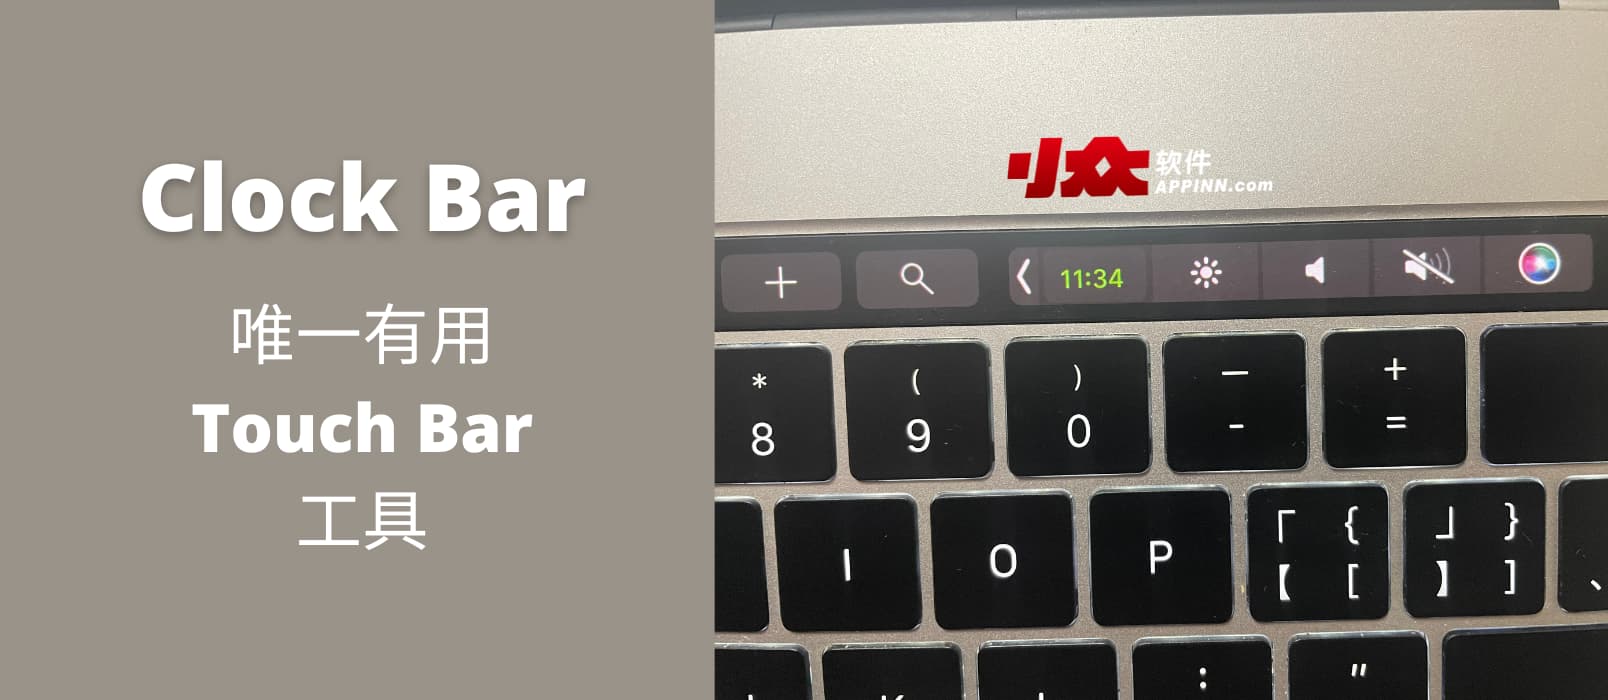 Clock Bar - 在 Touch Bar 显示当前时间，唯一有用 Touch Bar 工具